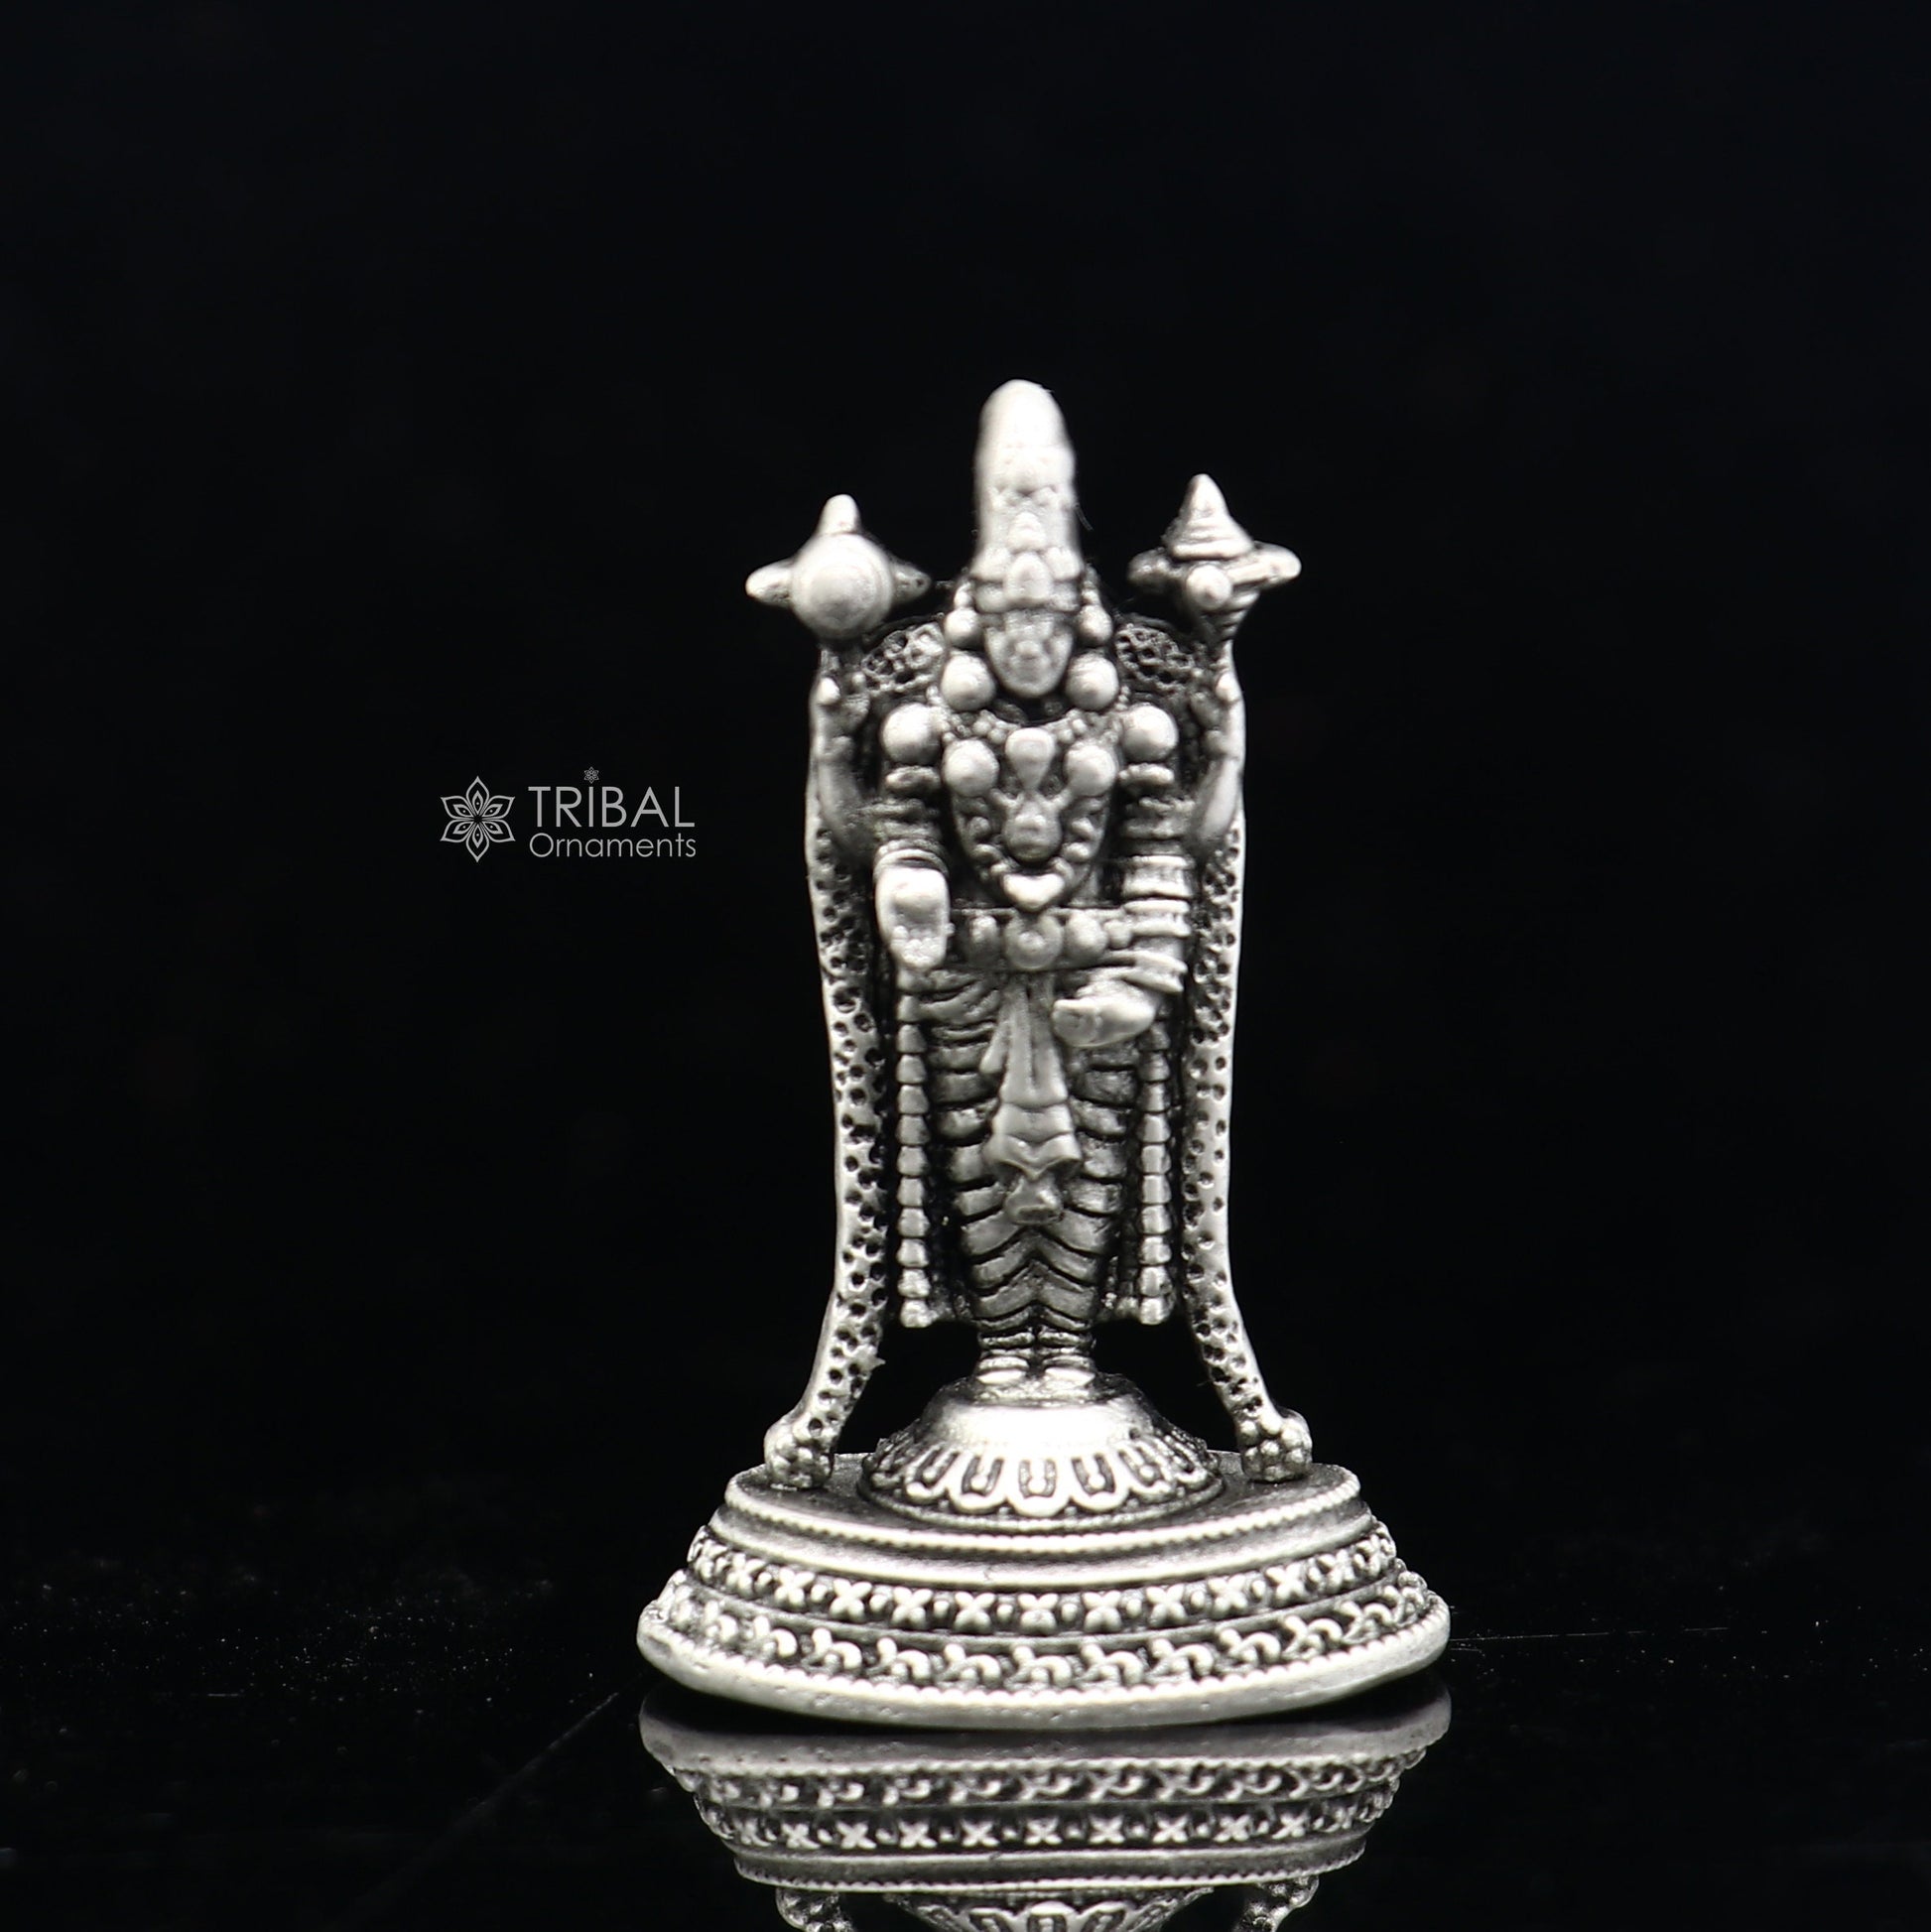 4cm 925 sterling silver stylish divine Venkateswara idol tirupati balaji statue sculpture figurine amazing crafted statue gift art734 - TRIBAL ORNAMENTS